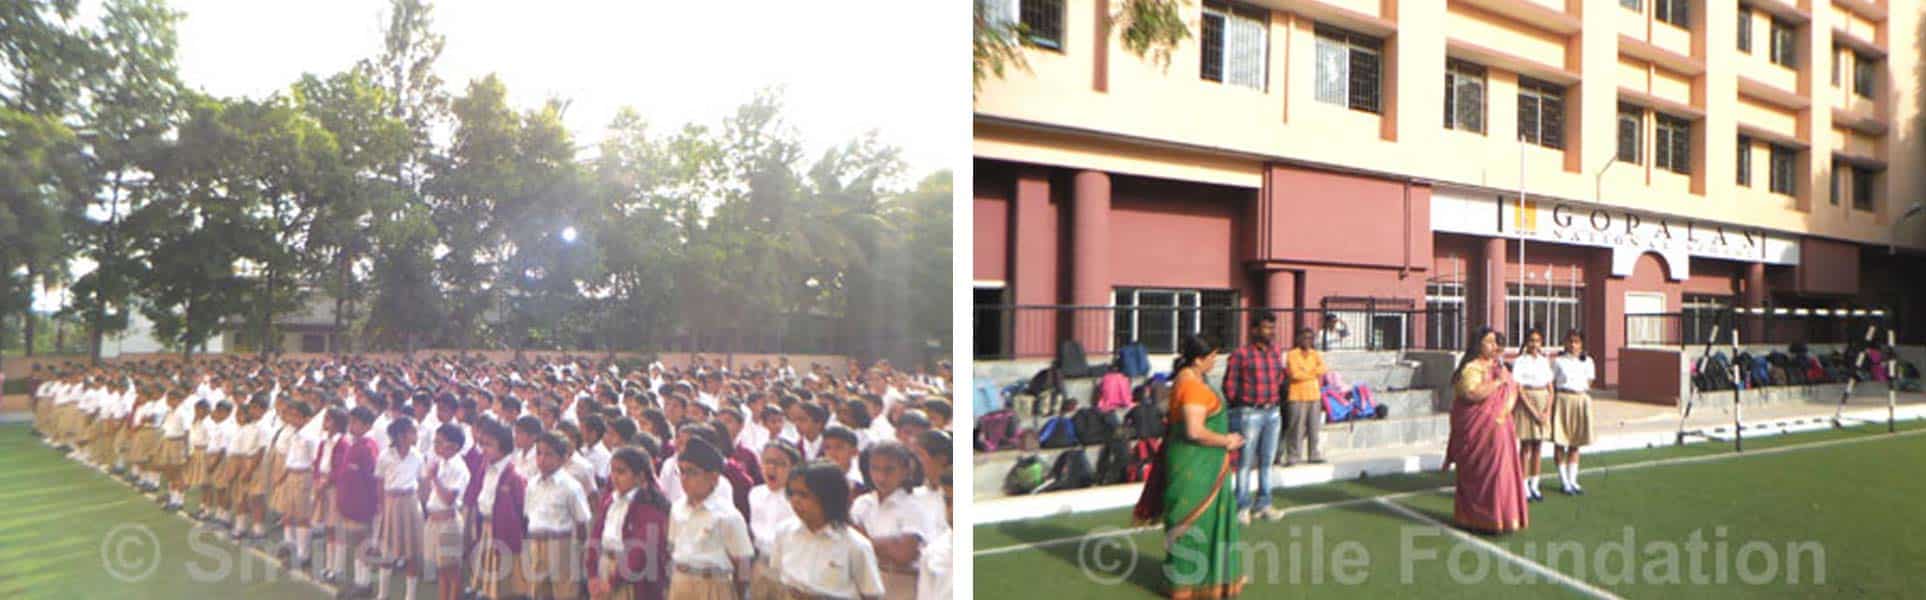 Value Education for Gopalan National School